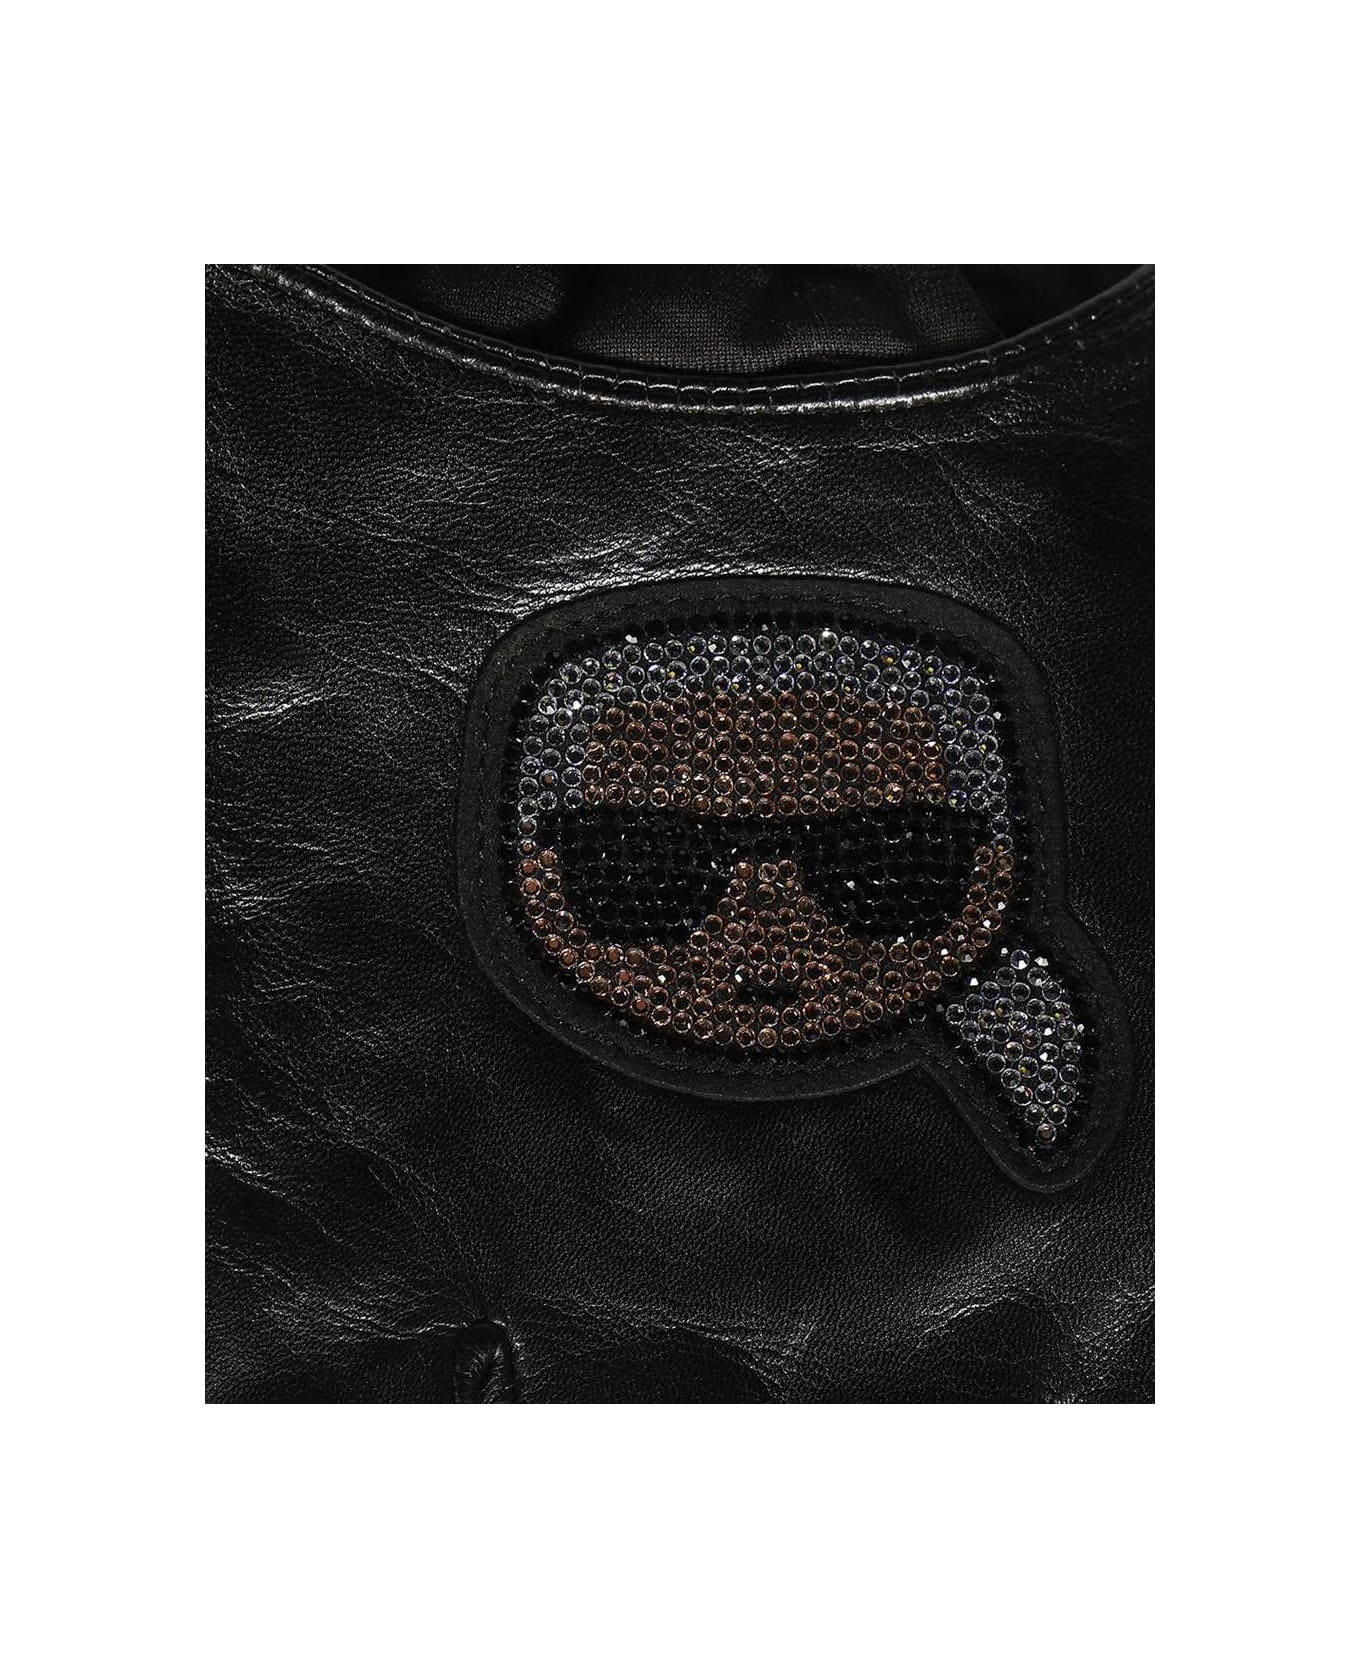 Karl Lagerfeld Leather Gloves - black